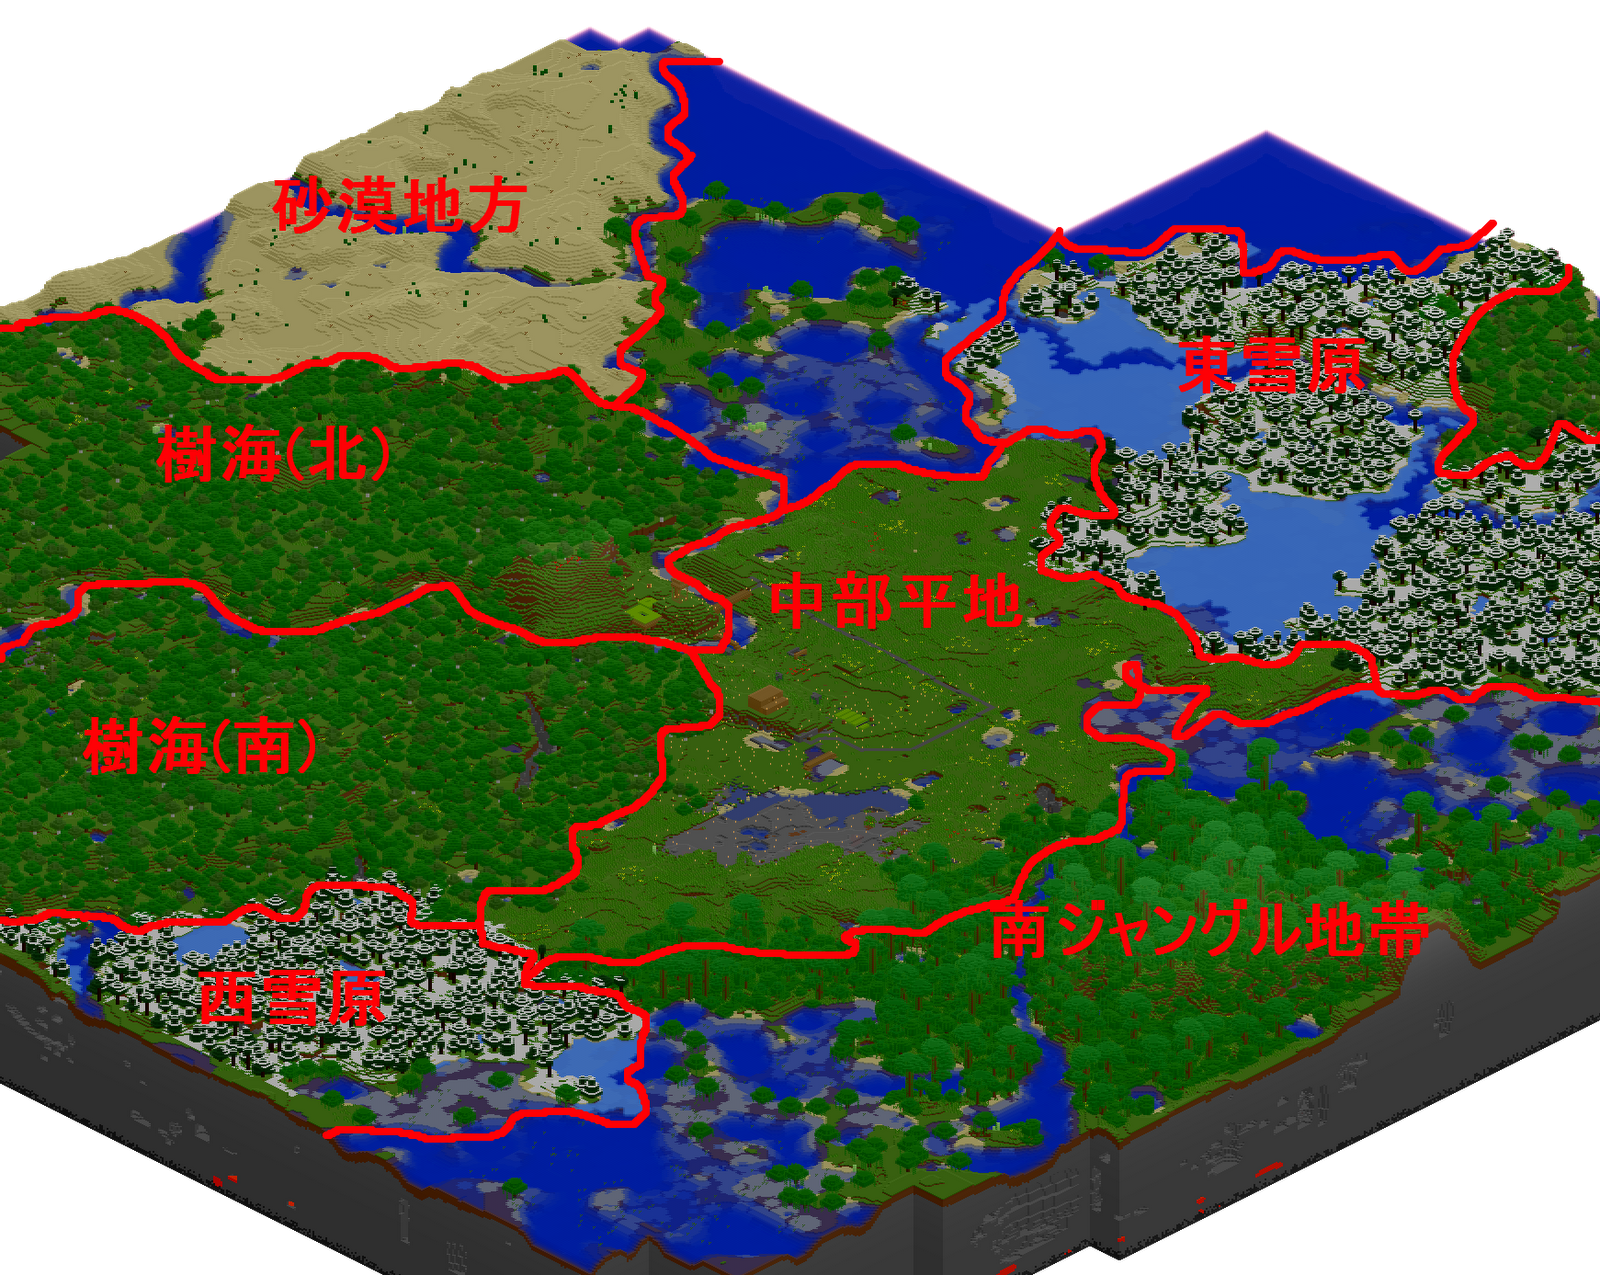 Kikkichanのminecraft生活 ワールドマップ12年11月13日版